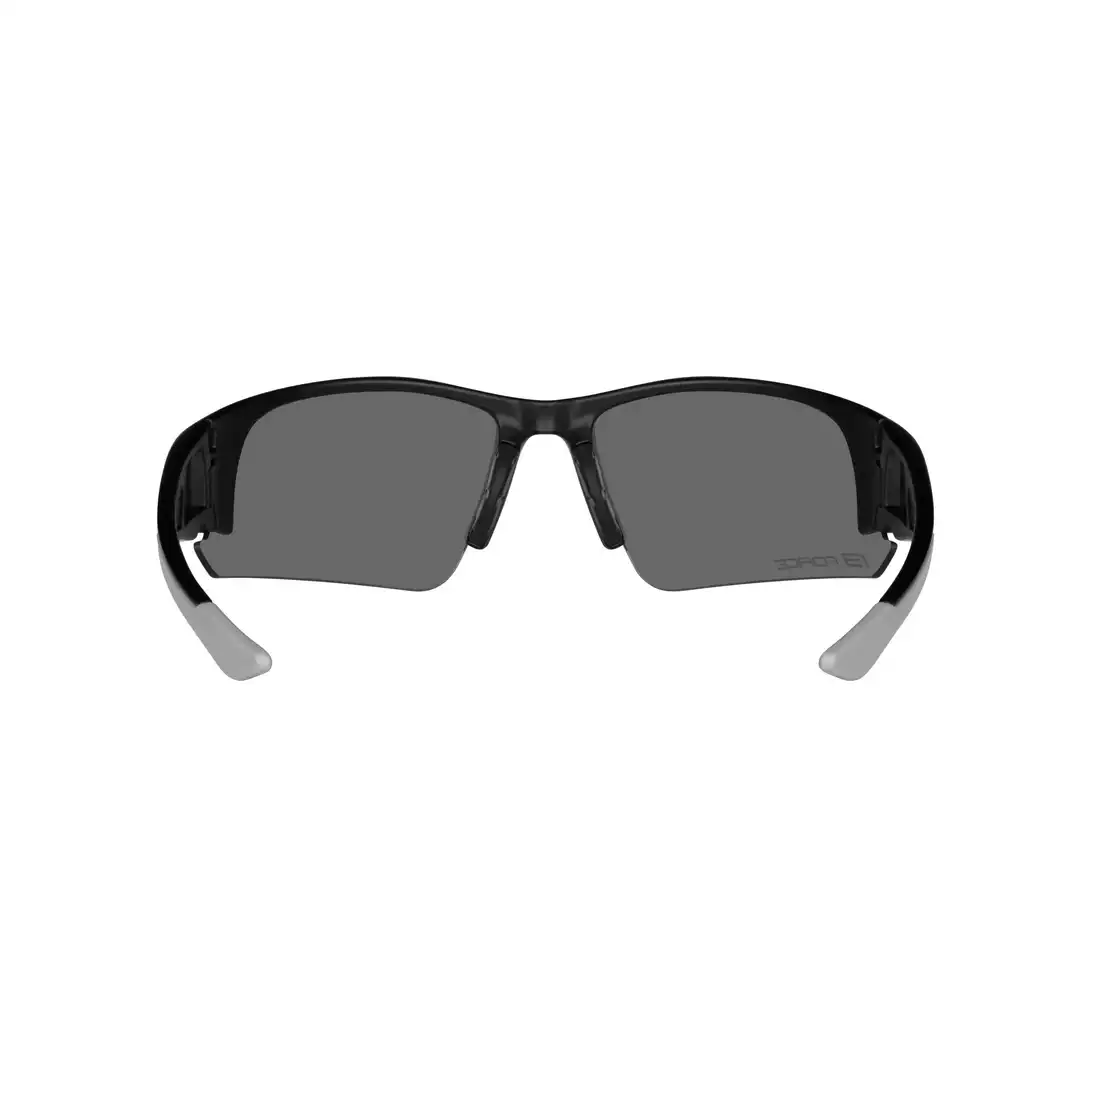 FORCE CALIBER bicycle/sports glasses, photochromic, black